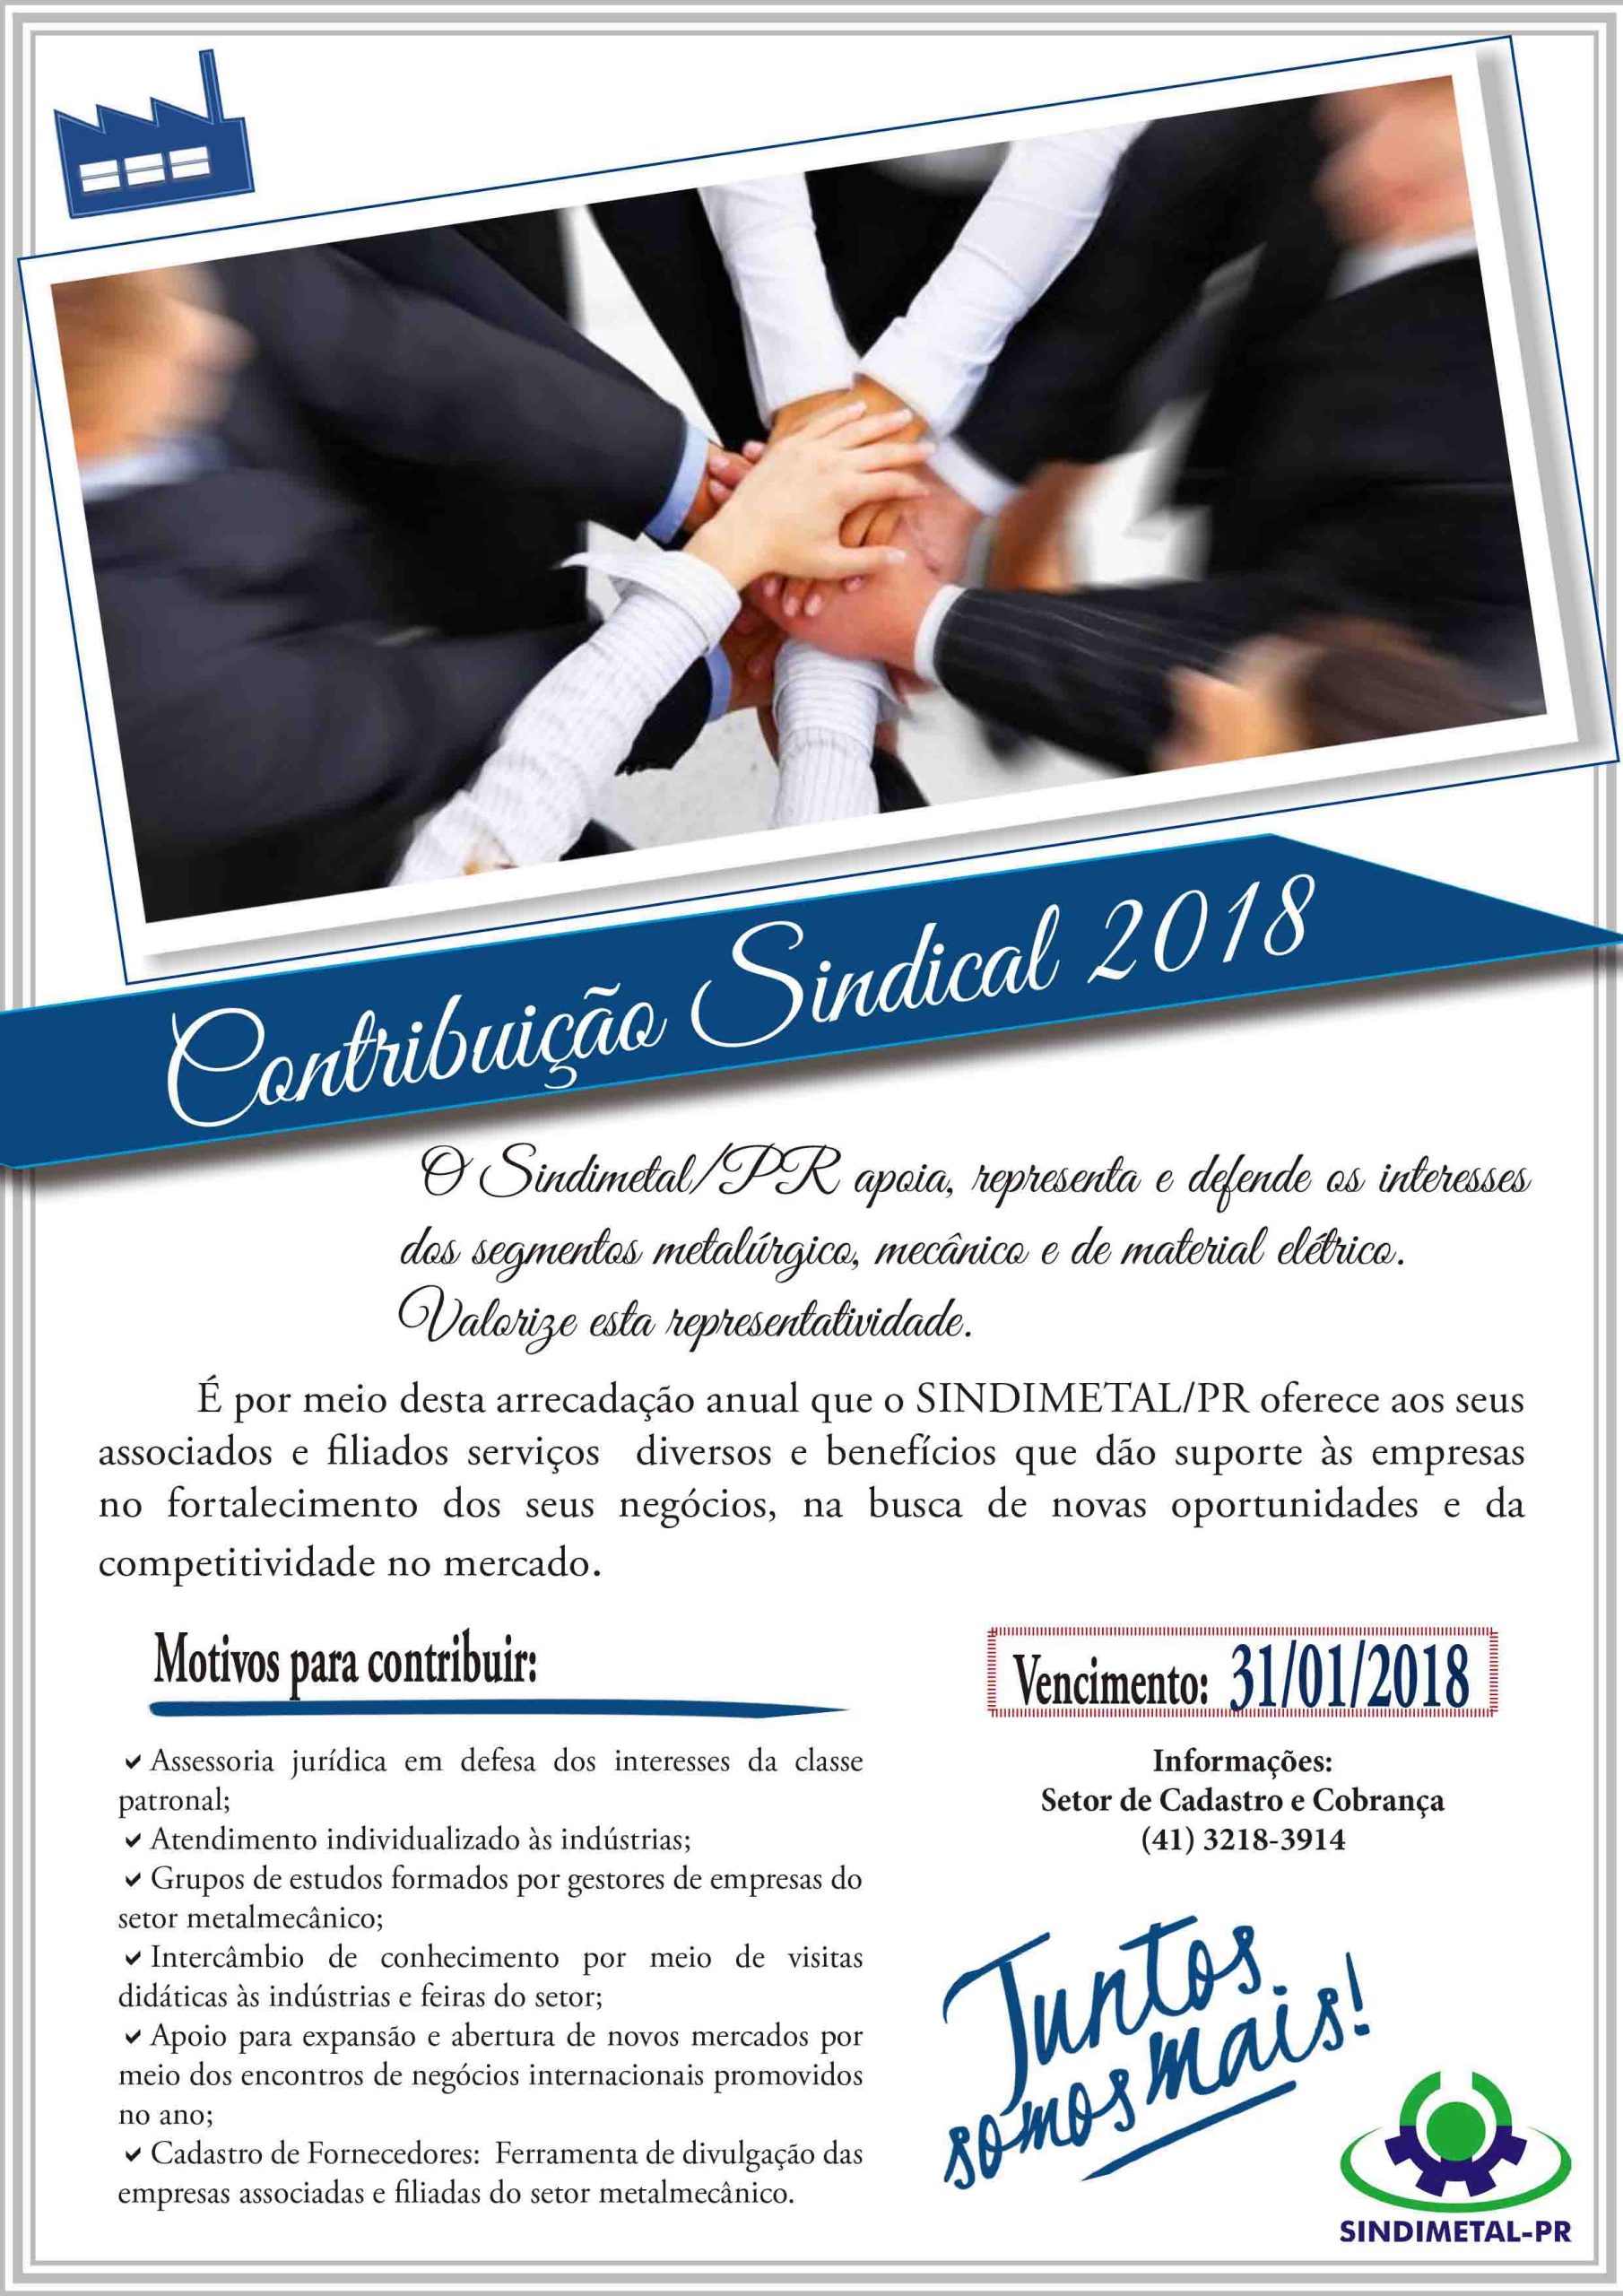 Email CONTRIBUICAO SINDICAL 2018